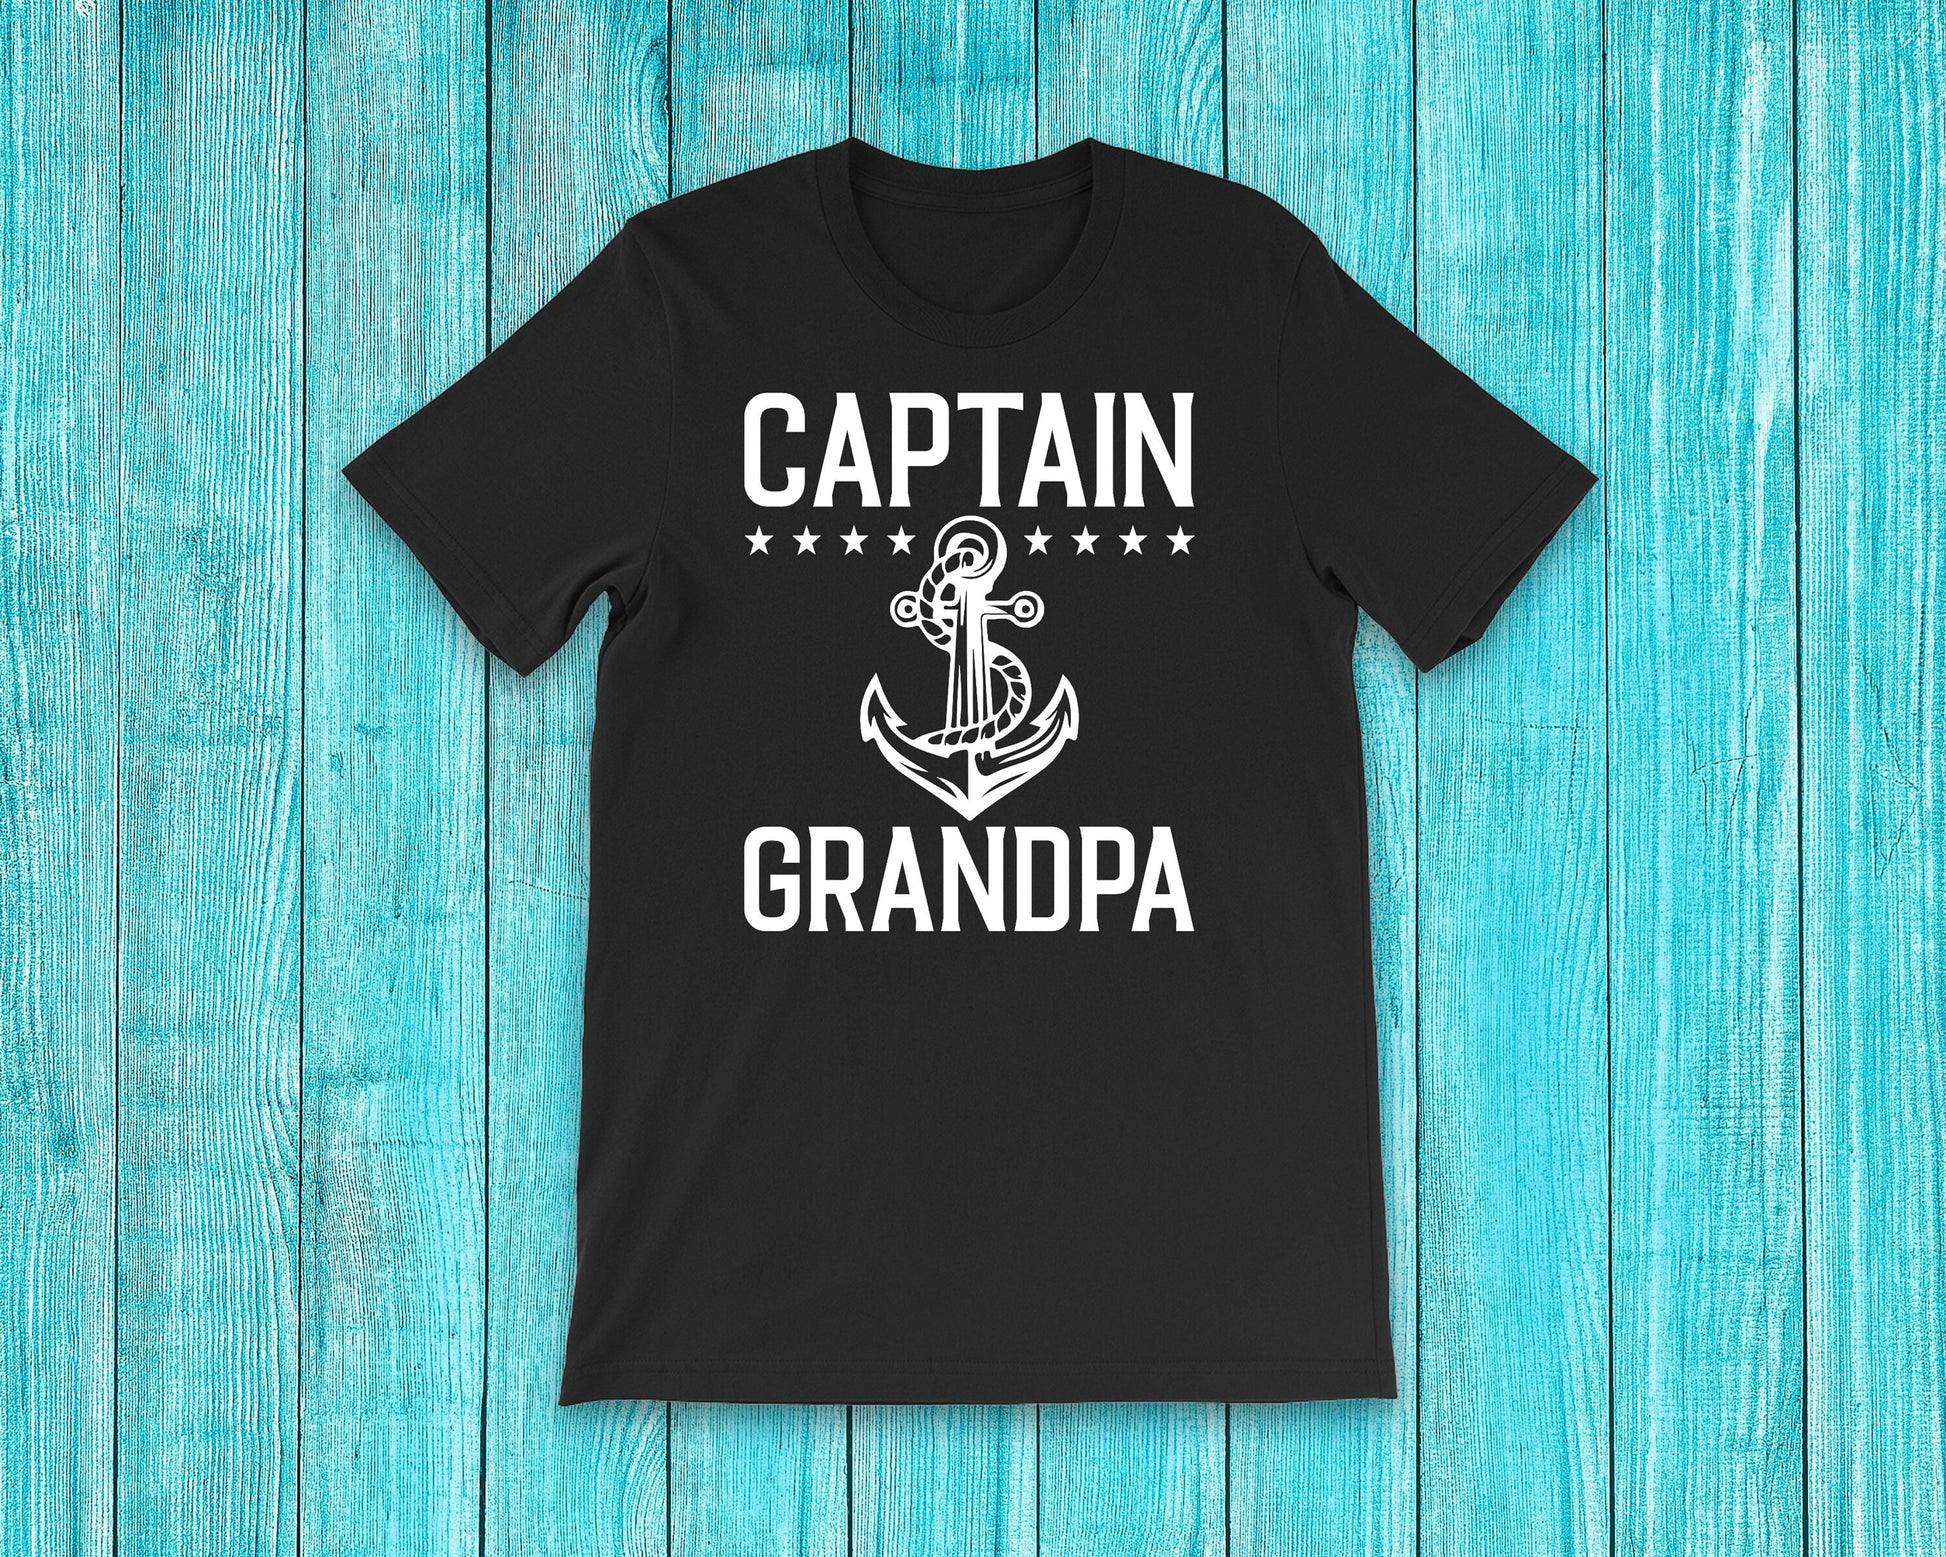 Captain Grandpa T-Shirt - Father's Day Shirt - Grandpa Shirt - Gifts for Dad - Dad Birthday Gift - Captain Shirt - Nautical Shirt